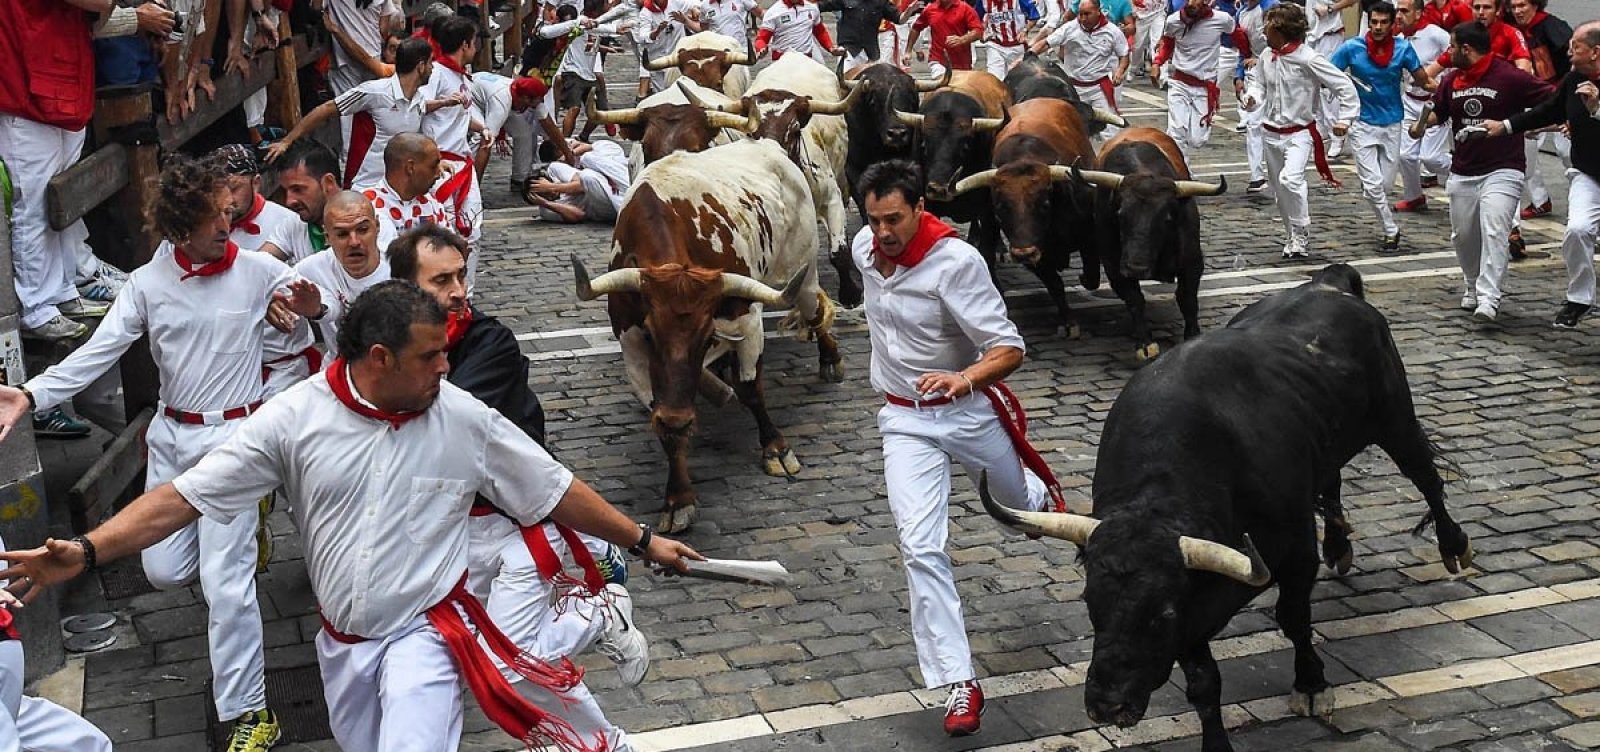 Corrida de touros tradicional na Espanha deixa seis feridos e lota as ruas  de cidade